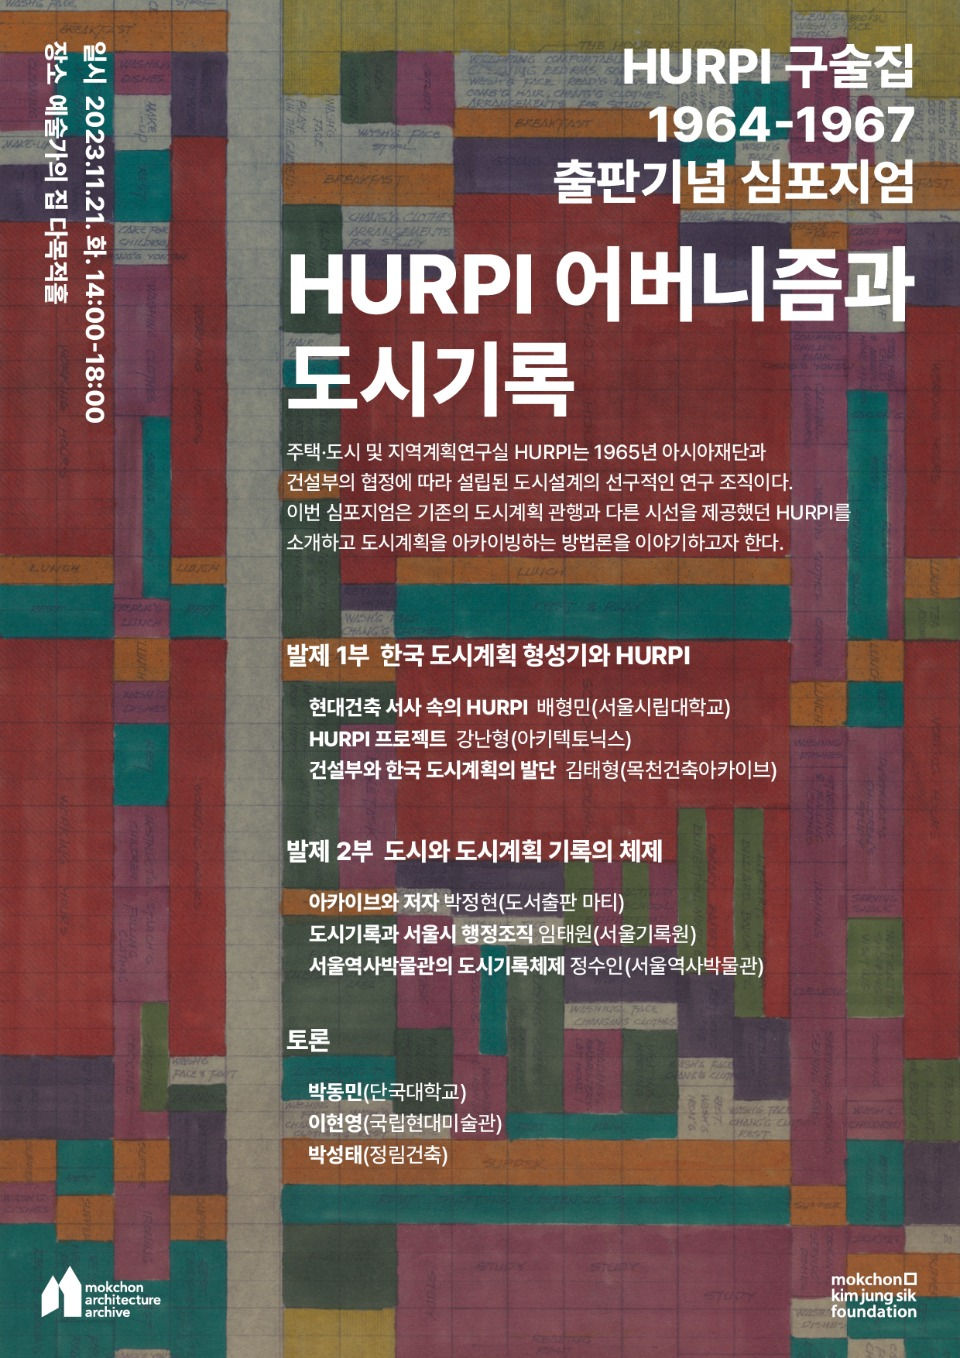 You are currently viewing HURPI 구술집 출판기념 심포지엄 – HURPI 어버니즘과 도시기록